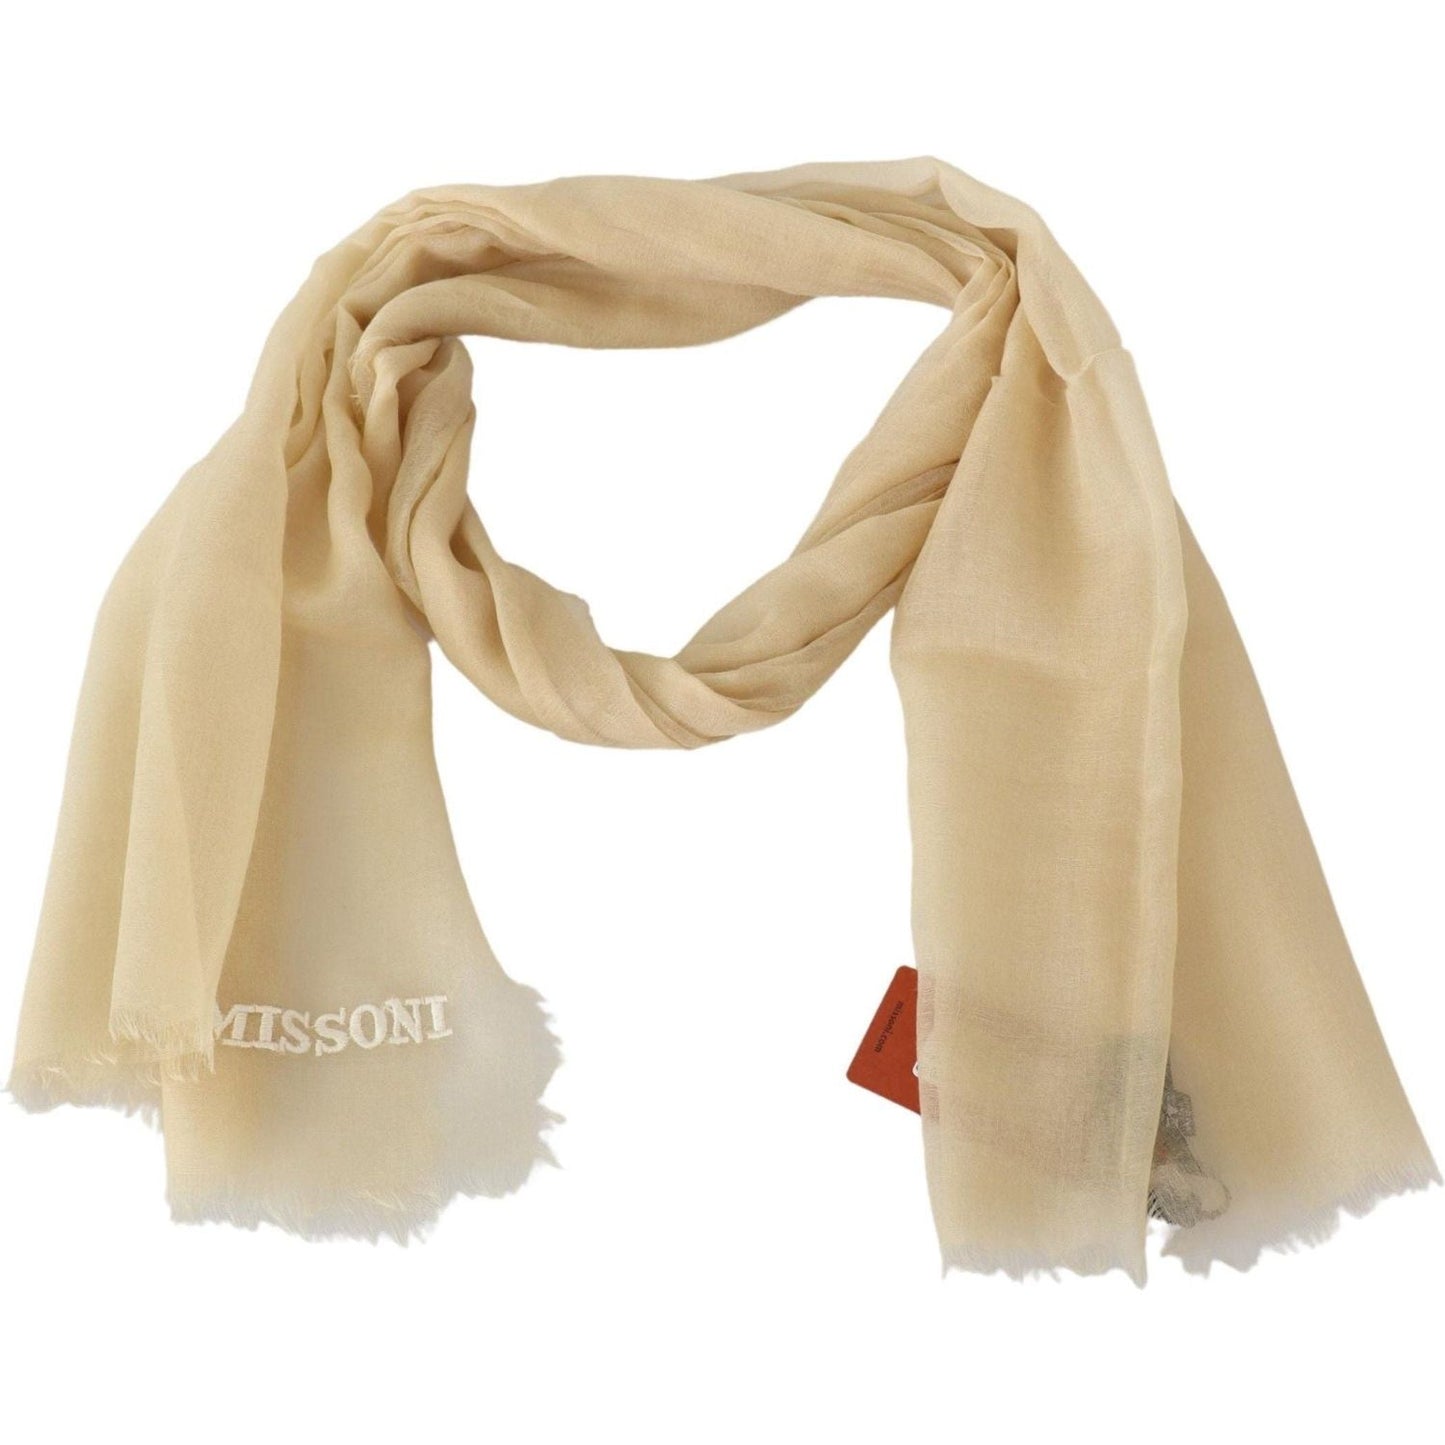 Missoni Elegant Cashmere Scarf in Beige beige-cashmere-unisex-neck-scarf IMG_1168-1-0fc77792-17a.jpg